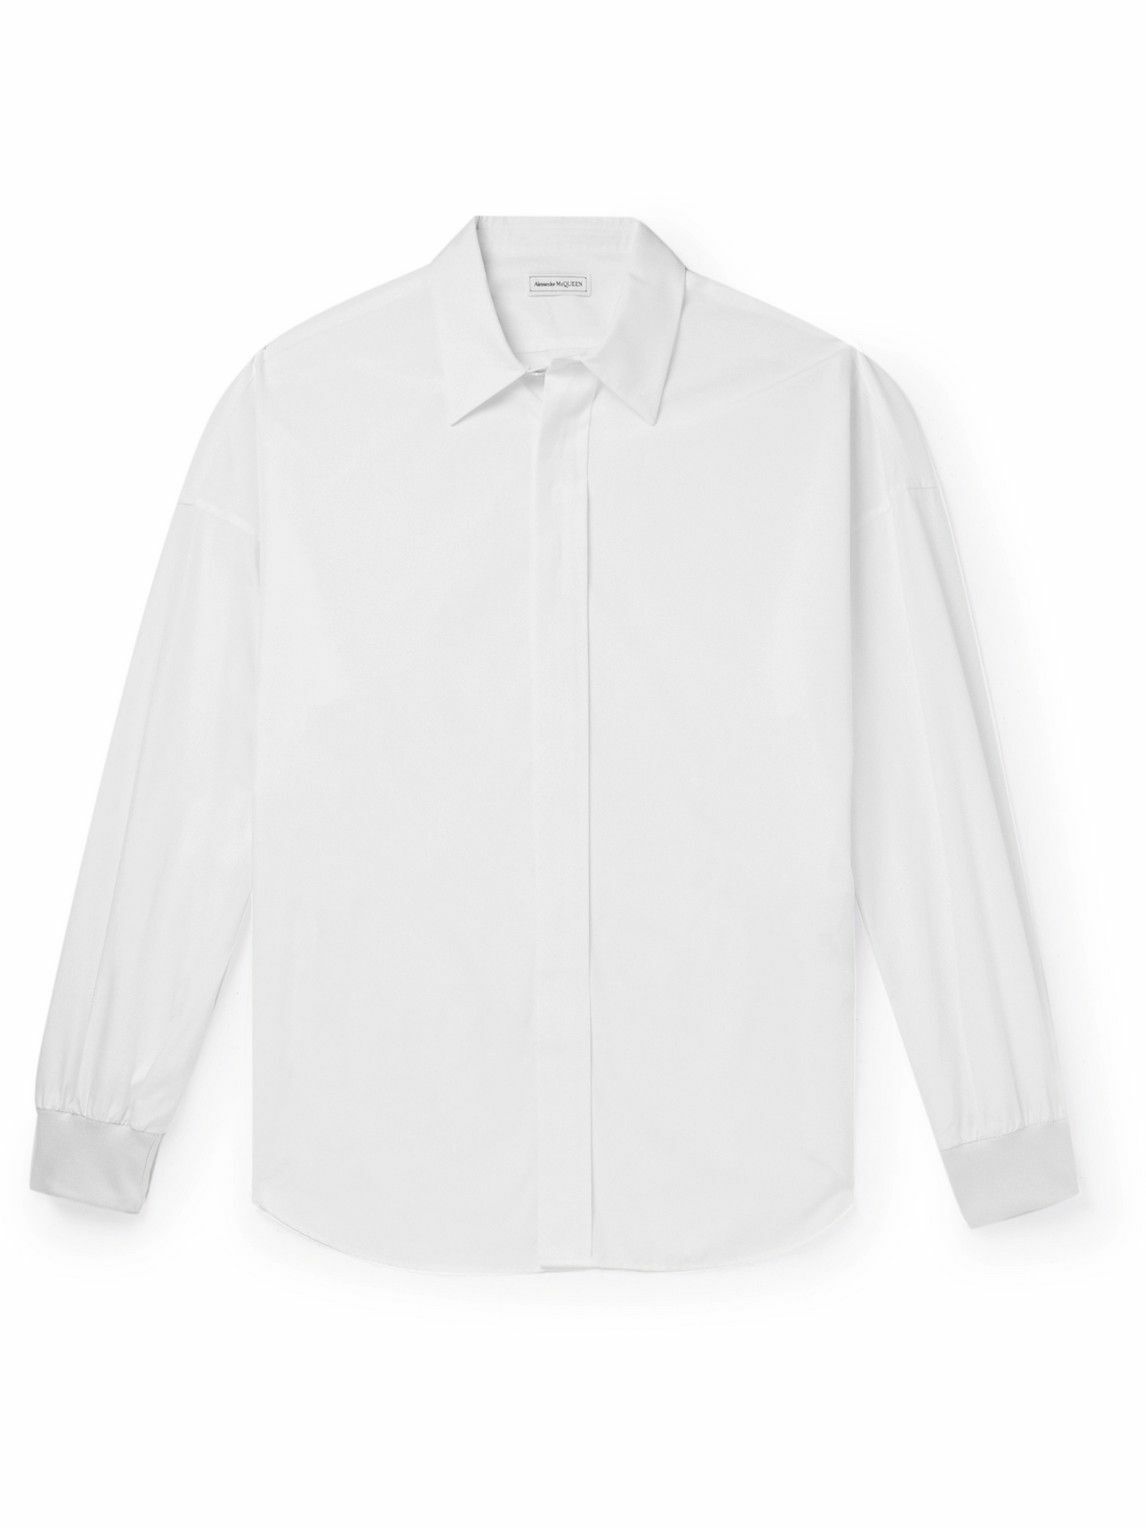 Alexander McQueen - Cotton-Poplin Shirt - White Alexander McQueen